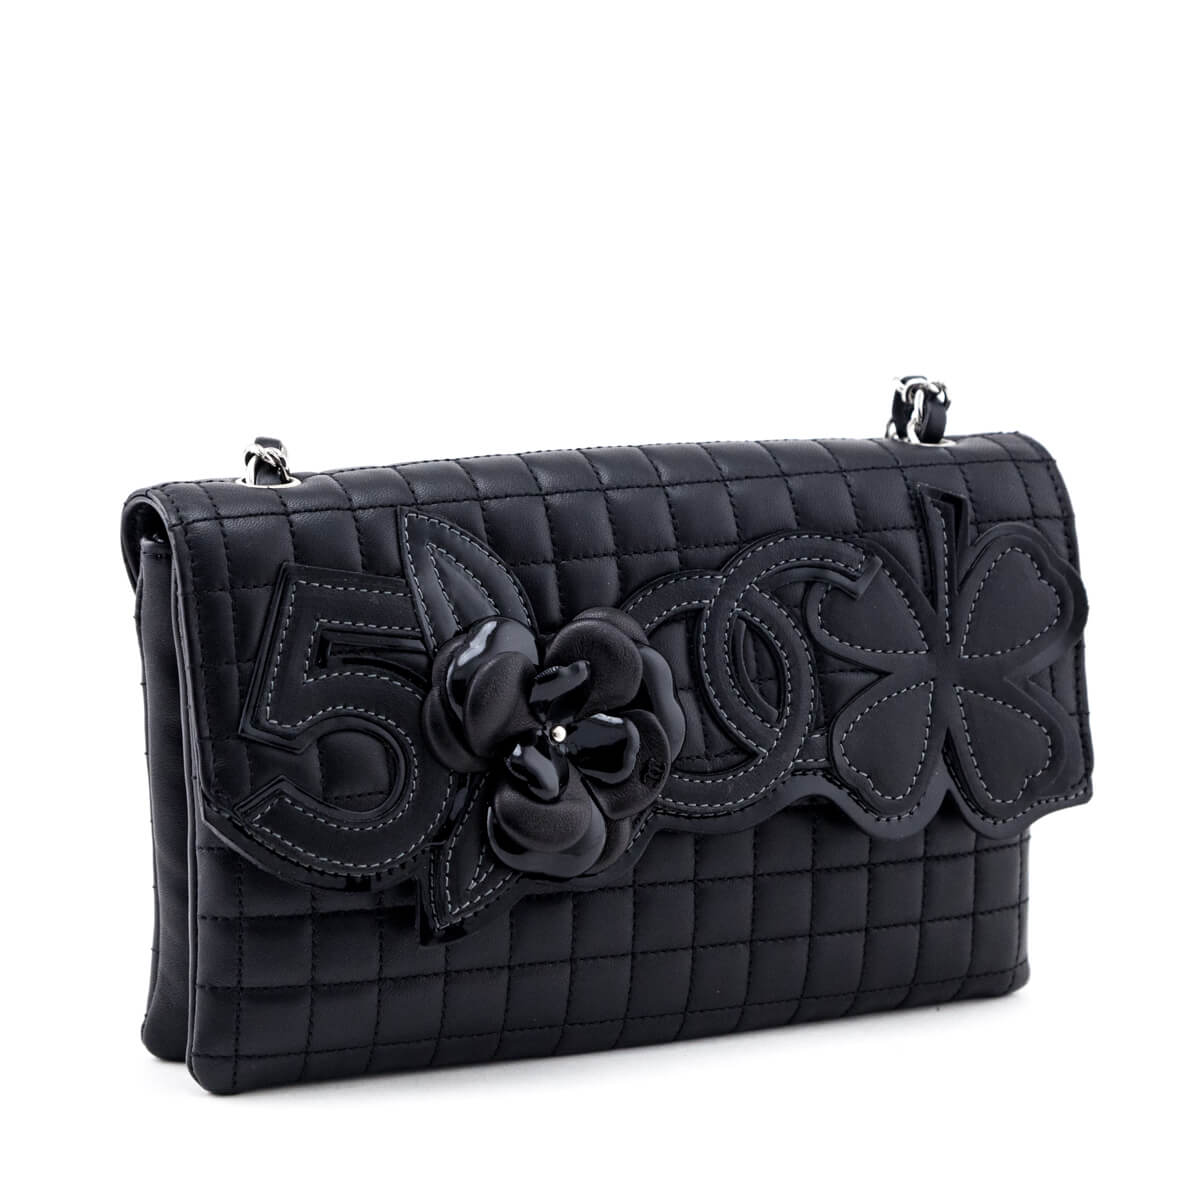 chanel black chain handbag strap